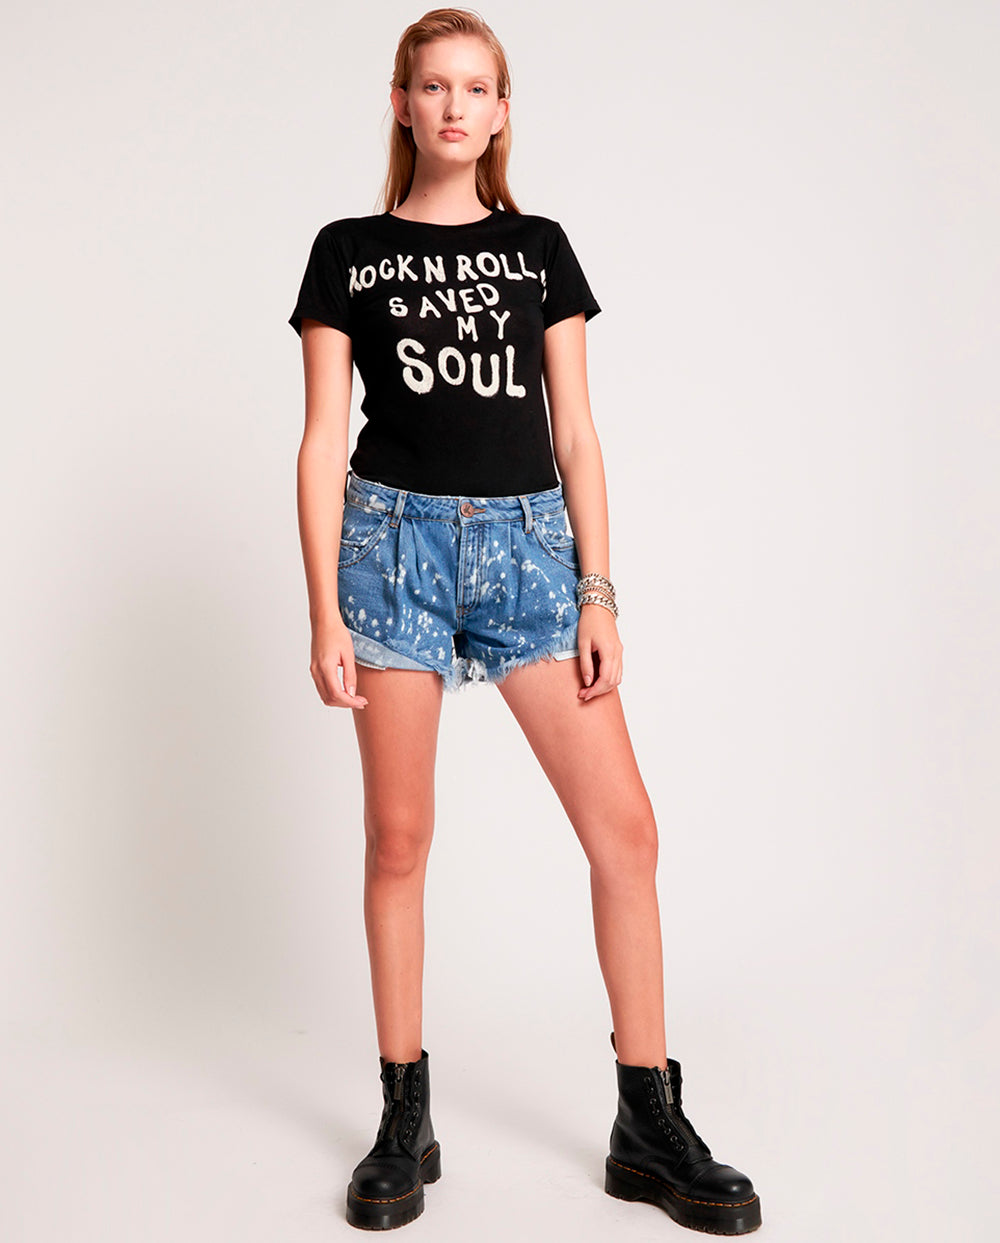 oneteaspoon_camiseta-negra-Rock-n-Rolll-save-my-soul